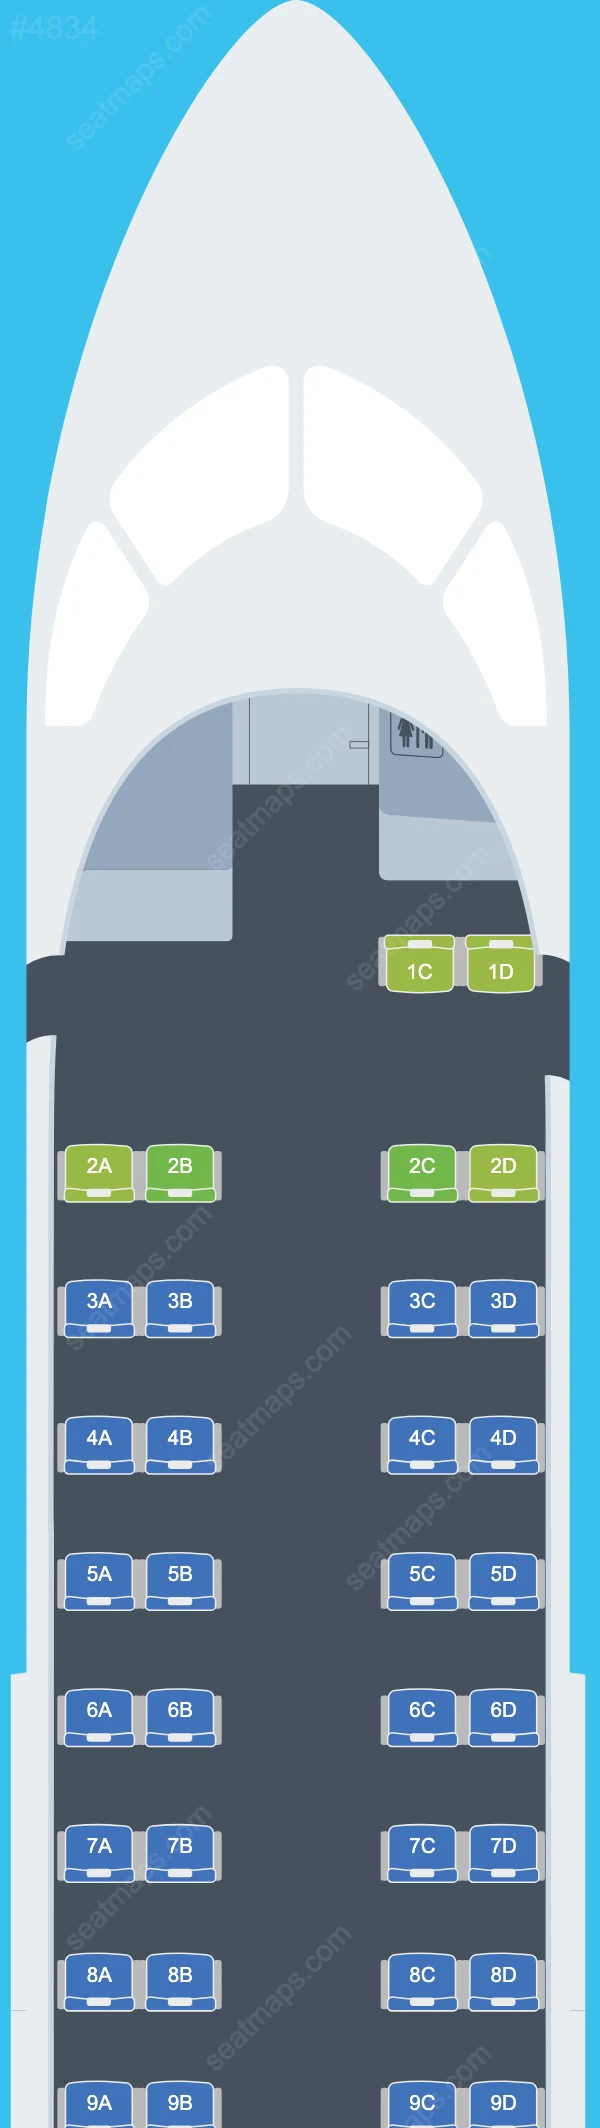 North Cariboo Air Bombardier Q300 Seat Maps Q300